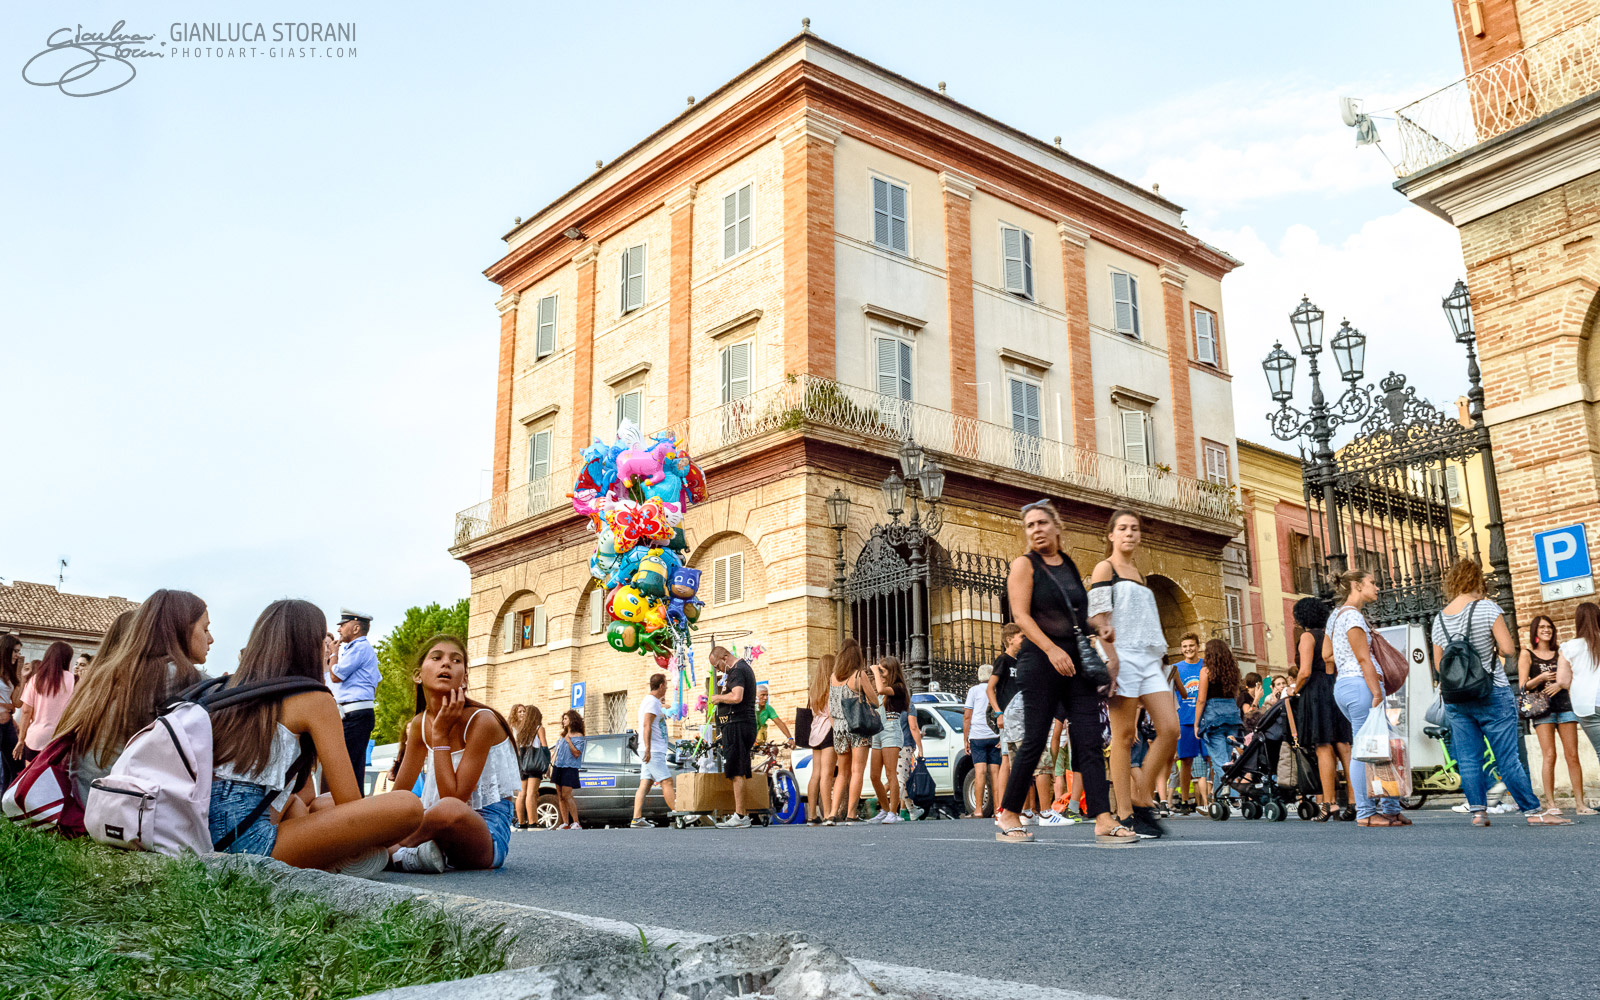 San Giuliano 2017, Piazza Garibaldi - Gianluca Storani Photo Art  (ID: 4-2545)